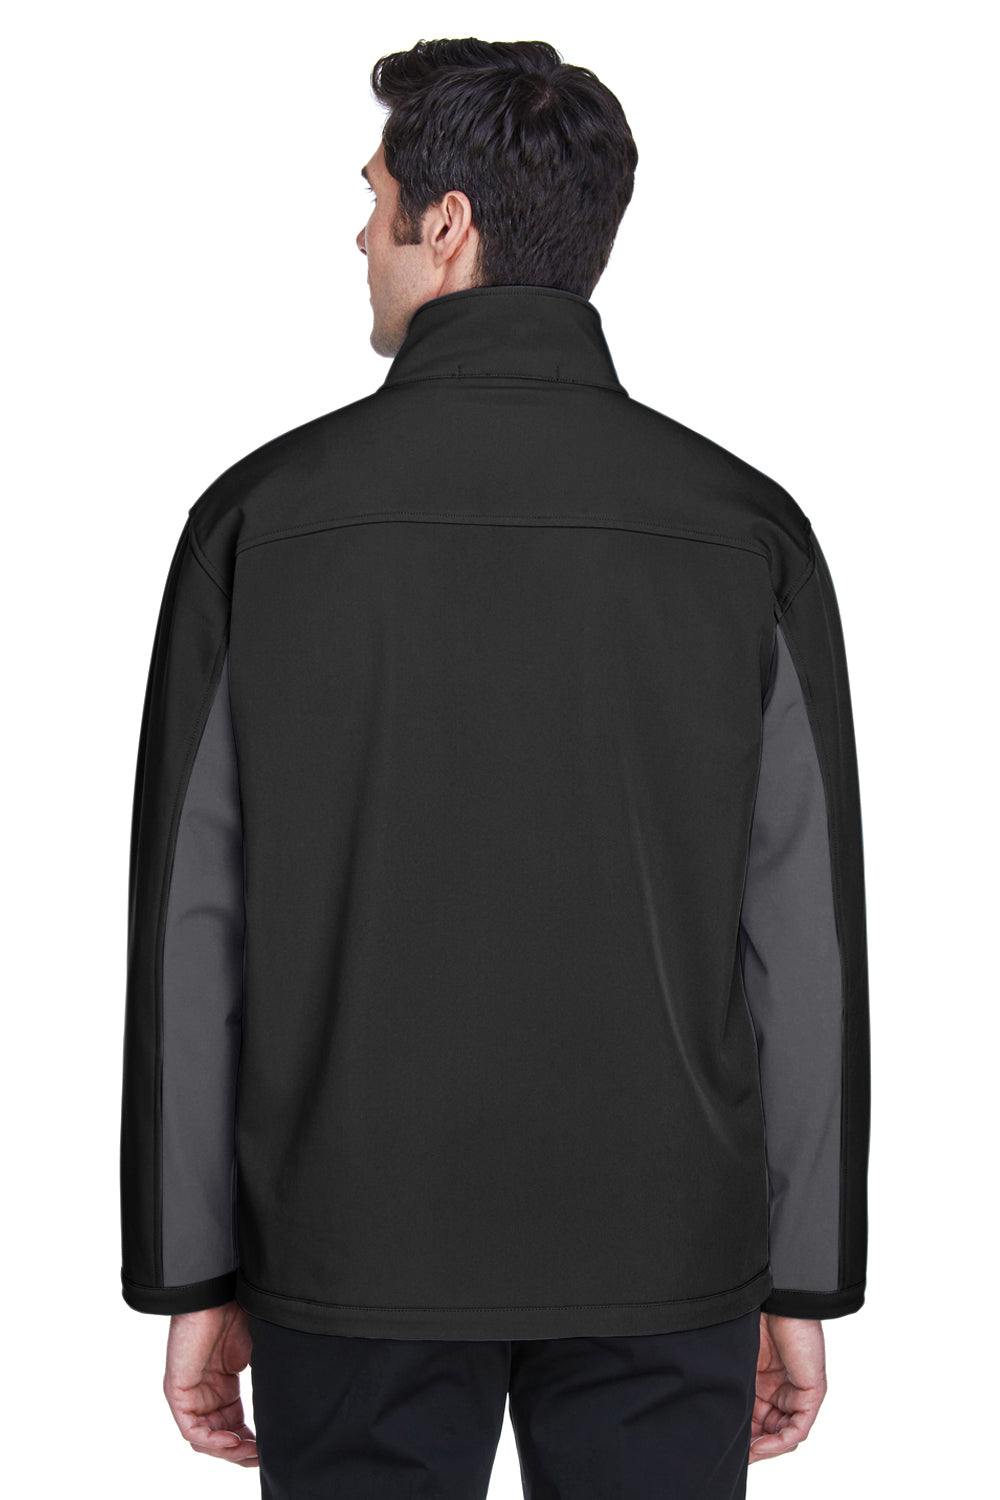 Devon & Jones D997 Mens Wind & Water Resistant Full Zip Jacket Black/Dark Grey Back